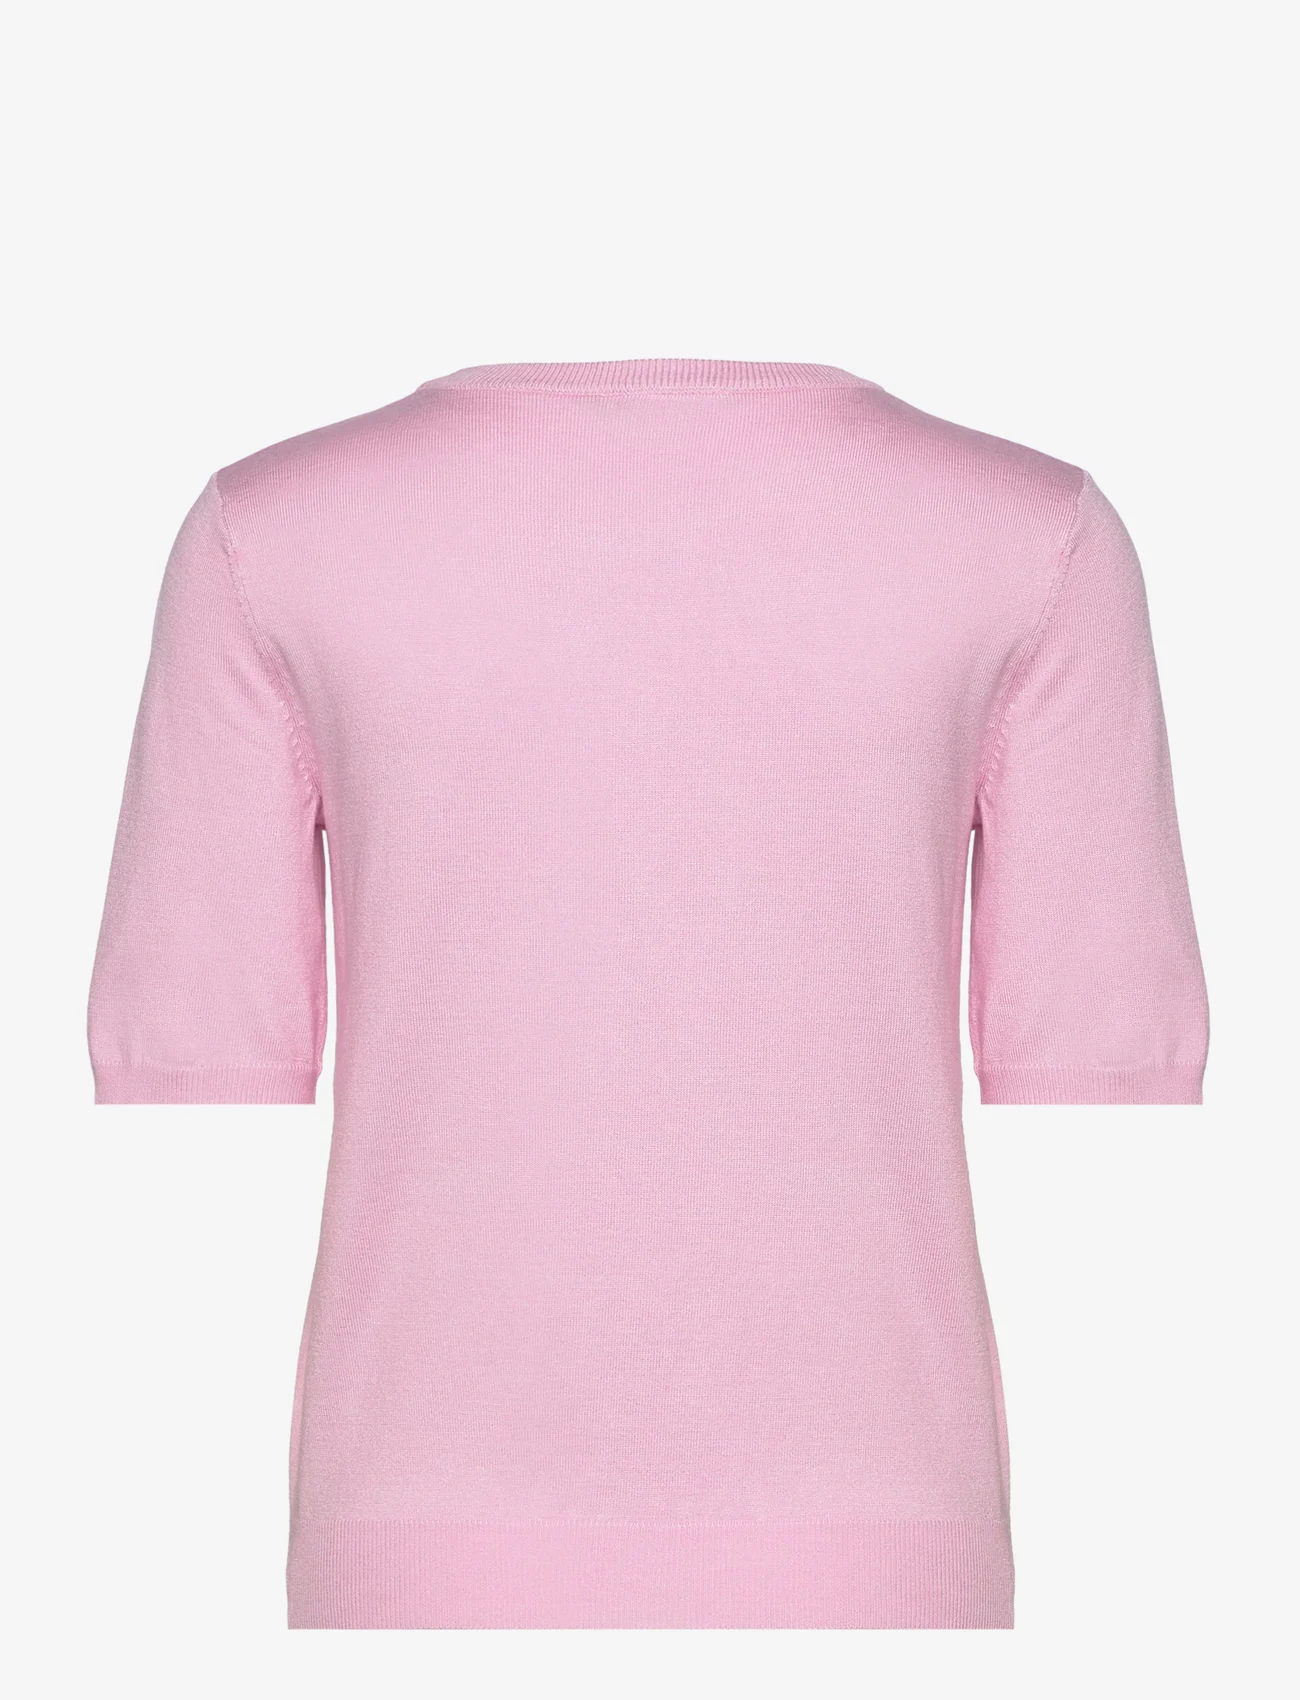 Kaffe - KAlizza O-neck pullover - laagste prijzen - pink mist - 1